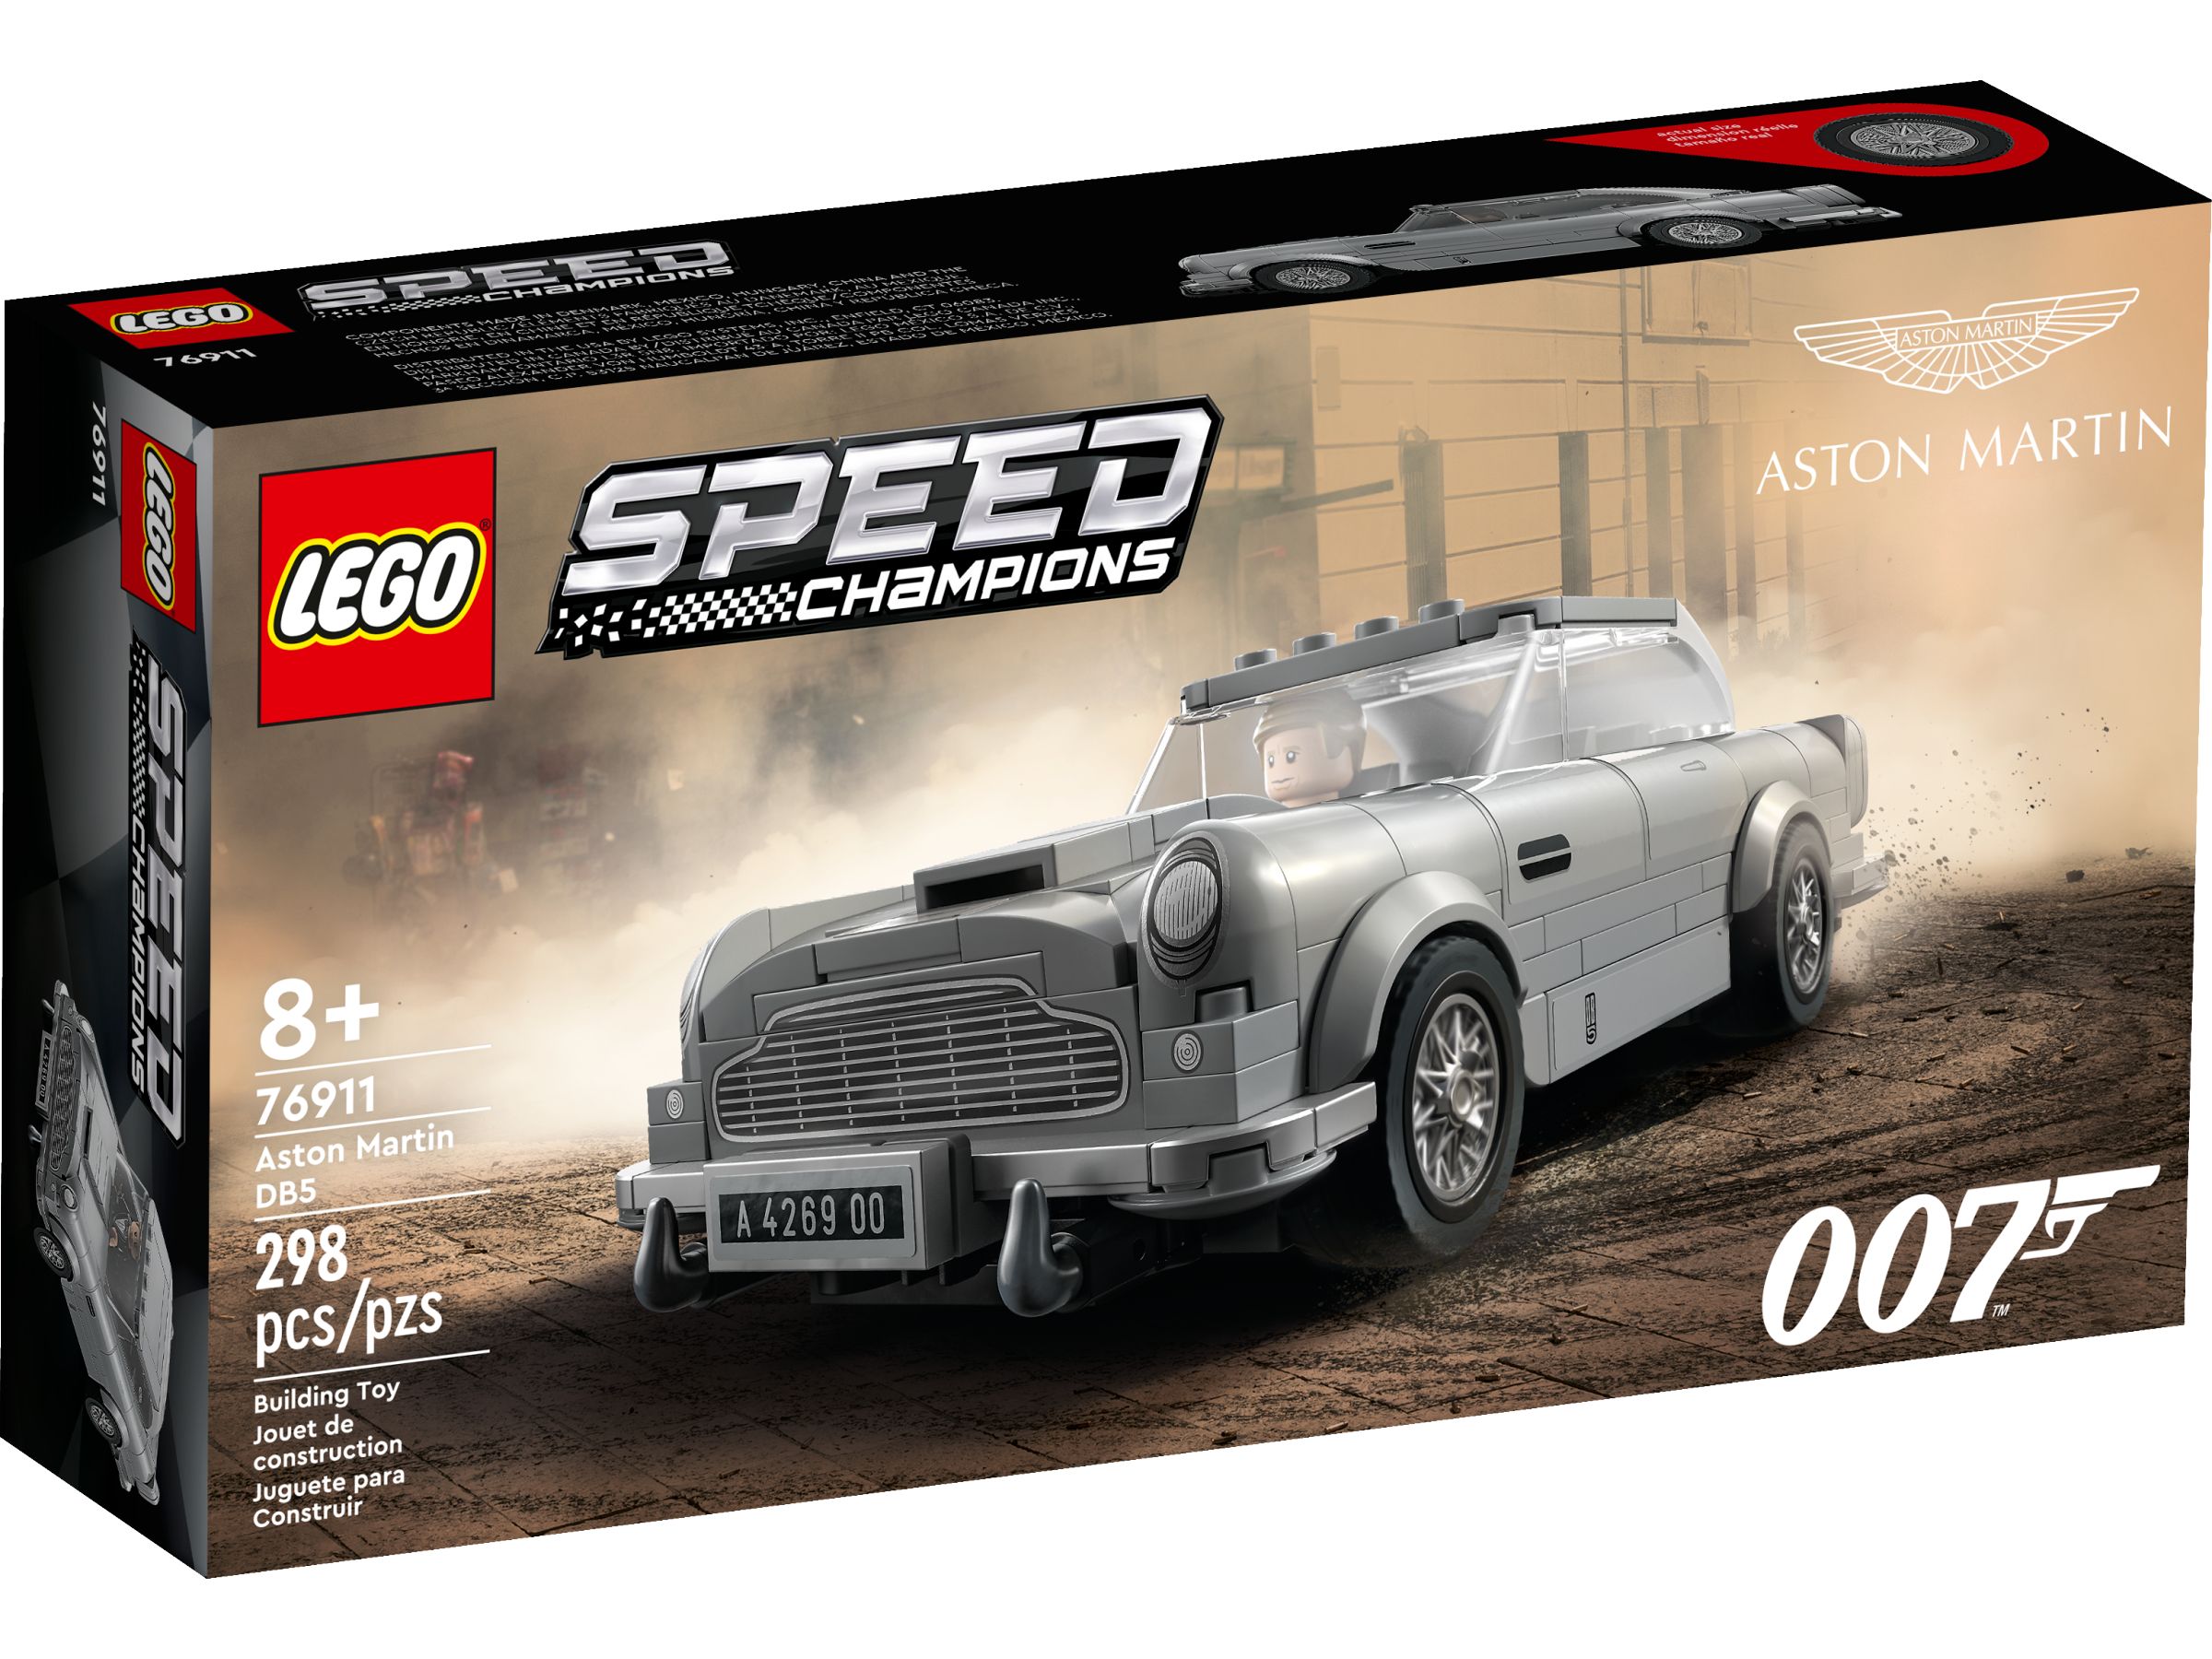 LEGO Speed Champions 76911 007 Aston Martin DB5 LEGO_76911_alt1.jpg